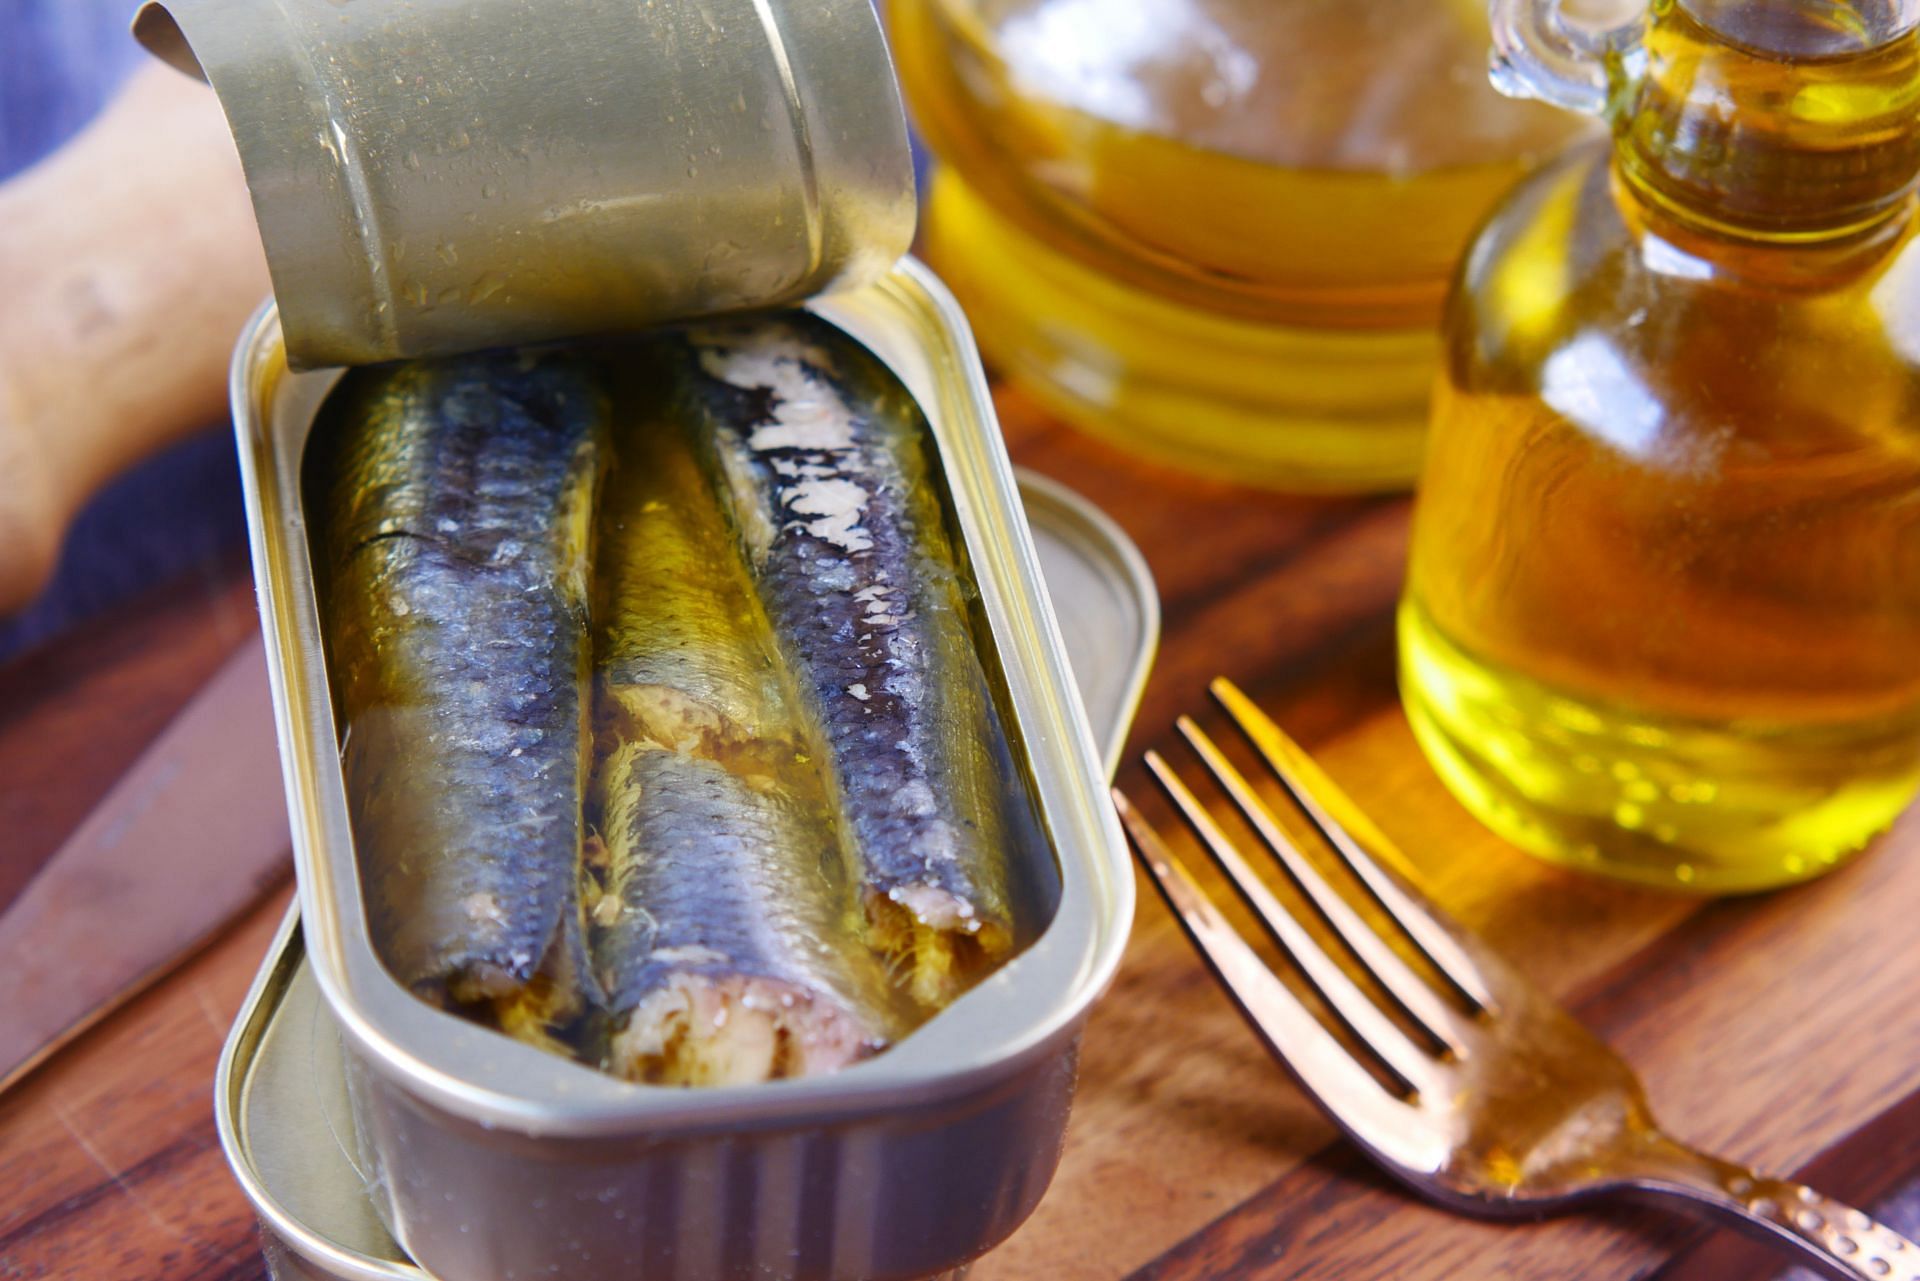 Anchovies and sardines are among the best fish to eat (Image via Unsplash/Towfiqu barbhuiya)